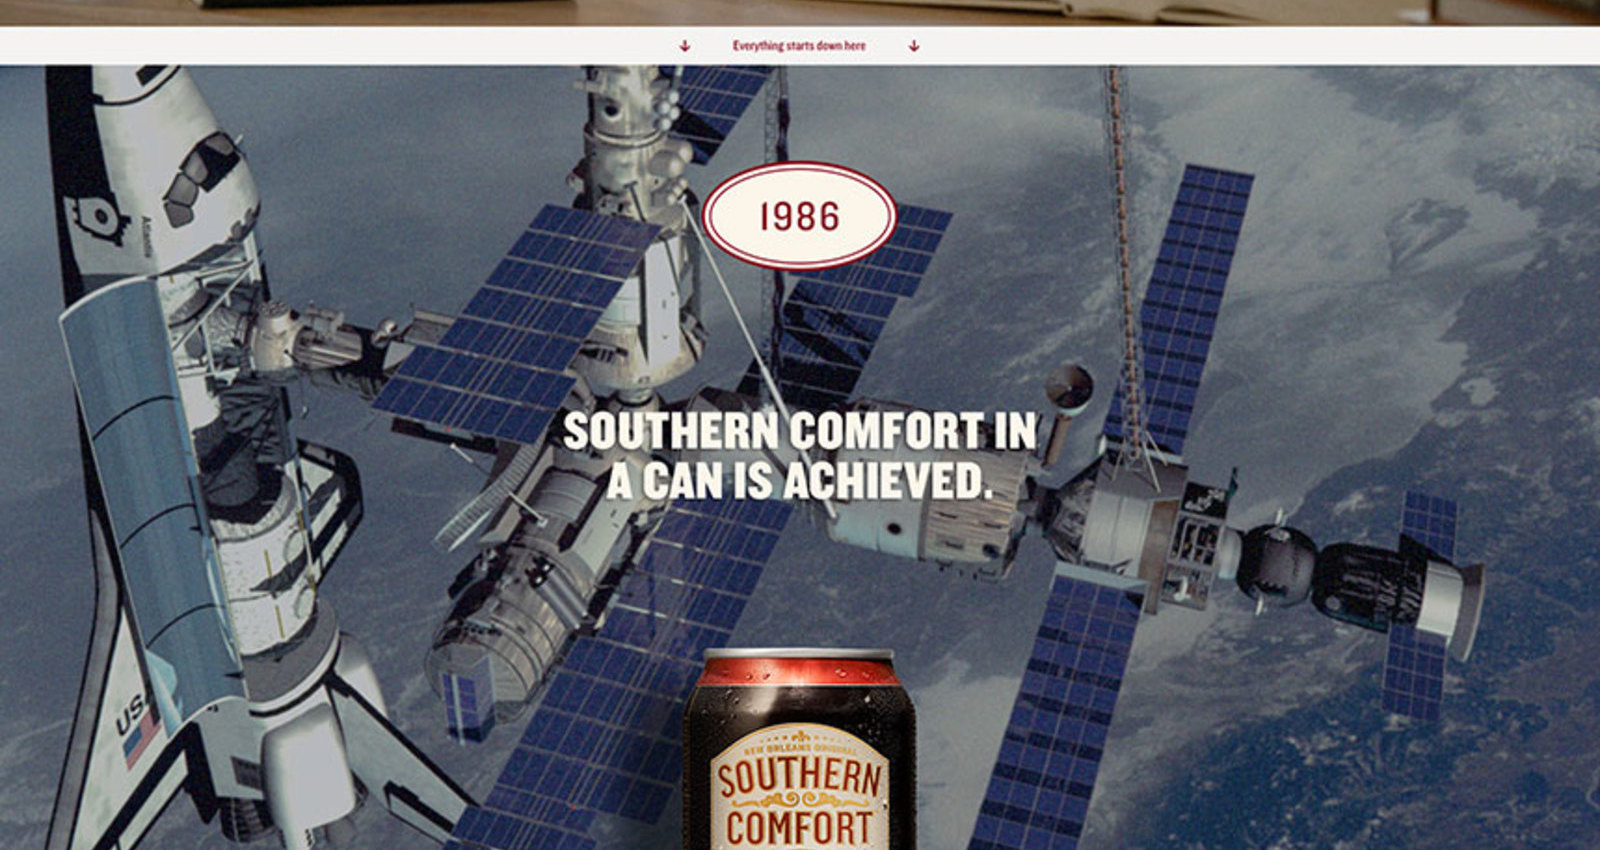 SouthernComfort.com